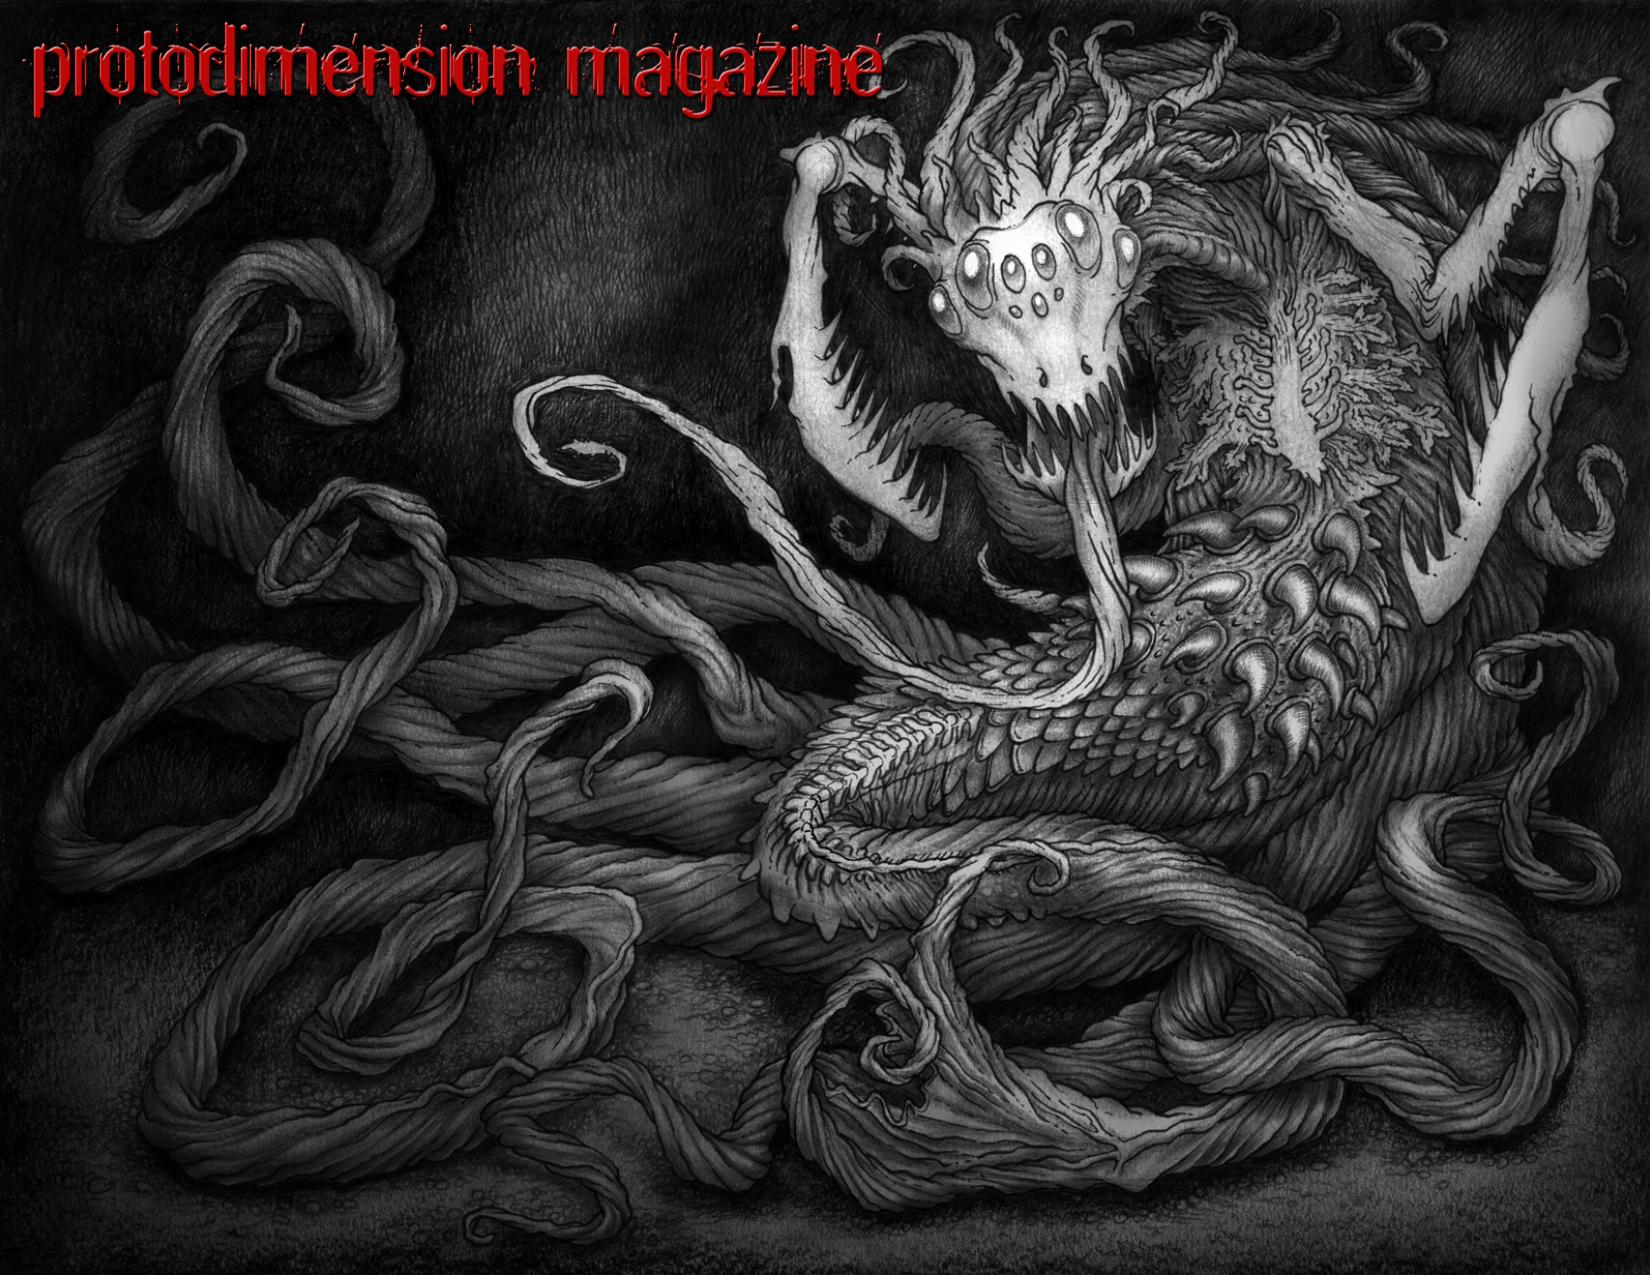 Protodimension Magazine #16 (Summer 2013)